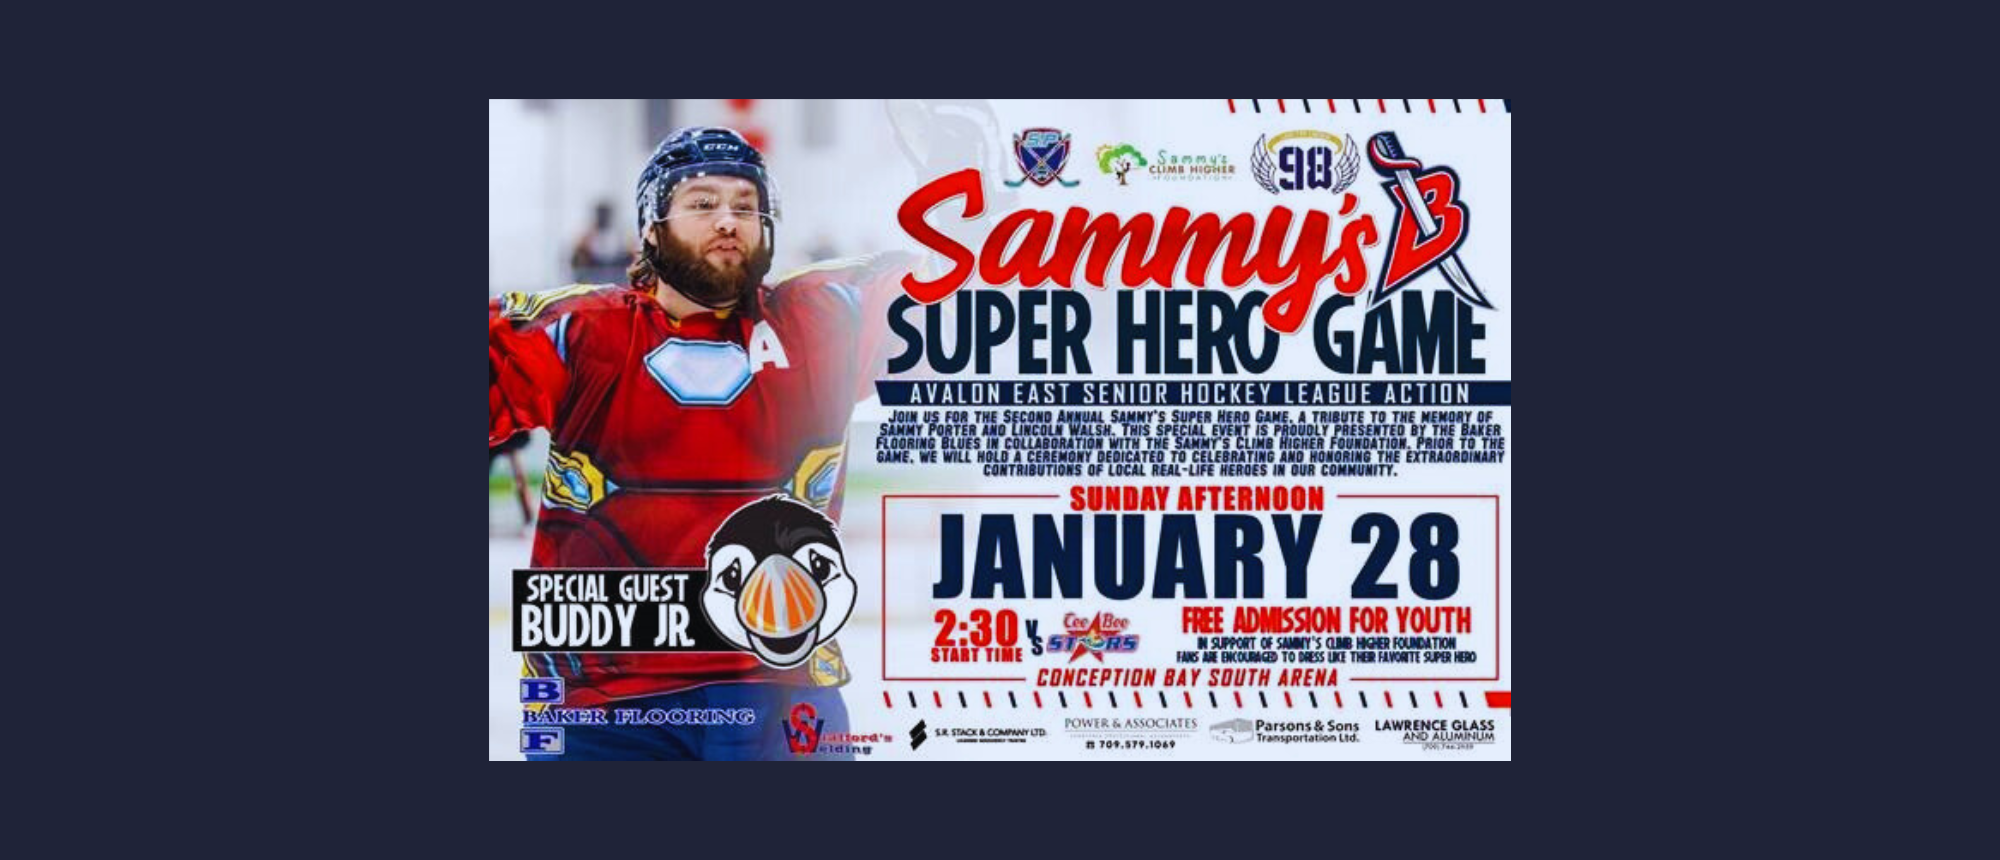 Sammy’s Super Hero Game